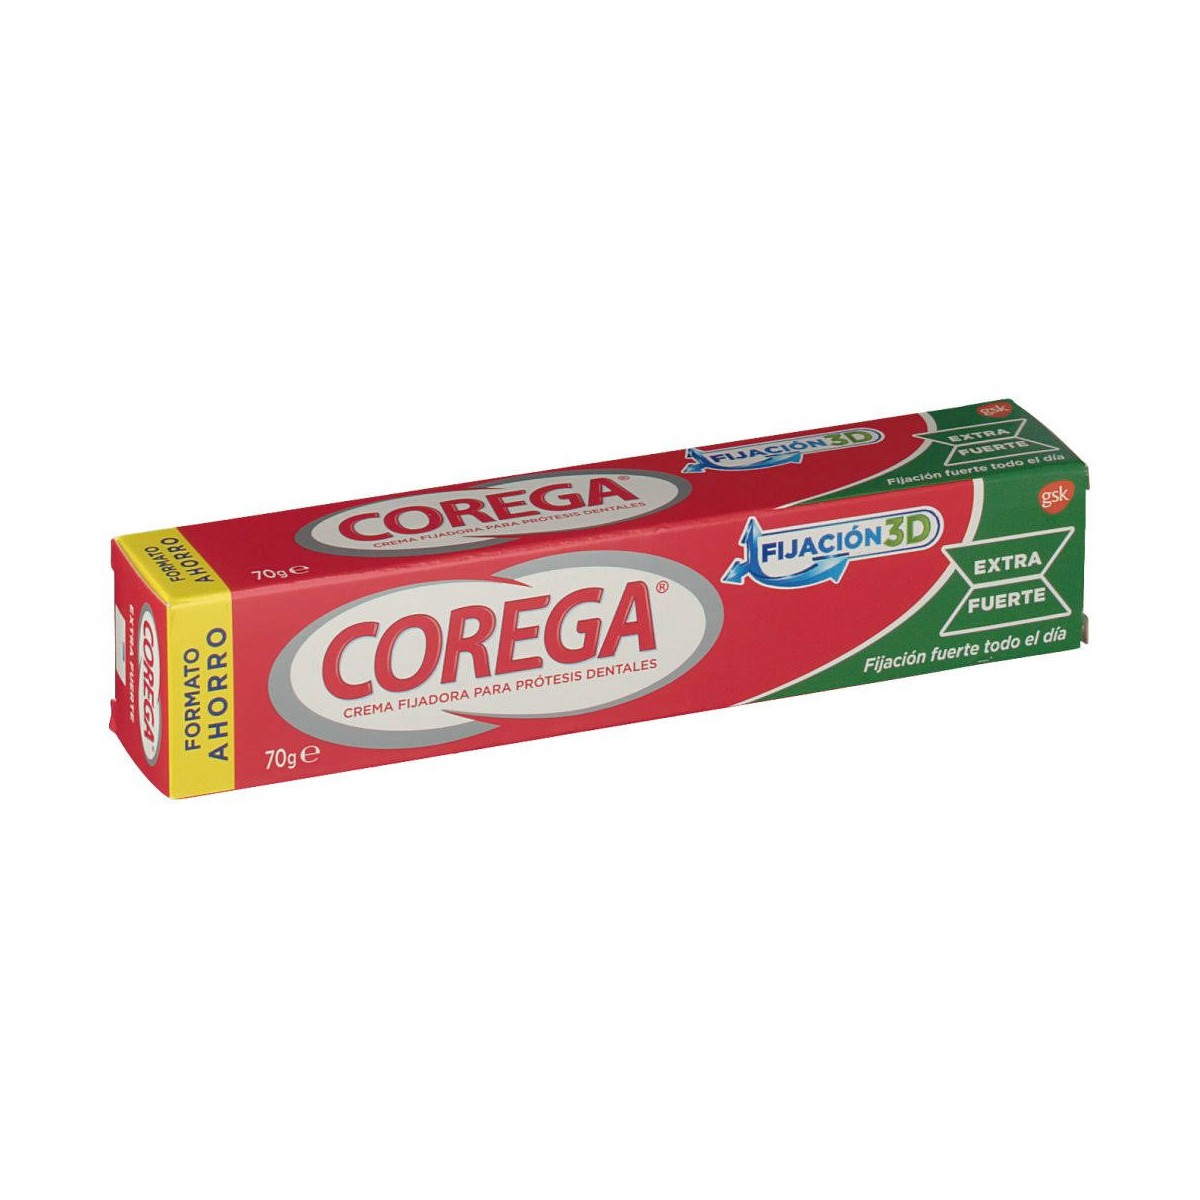 Corega Extra Fuerte 75-70 g